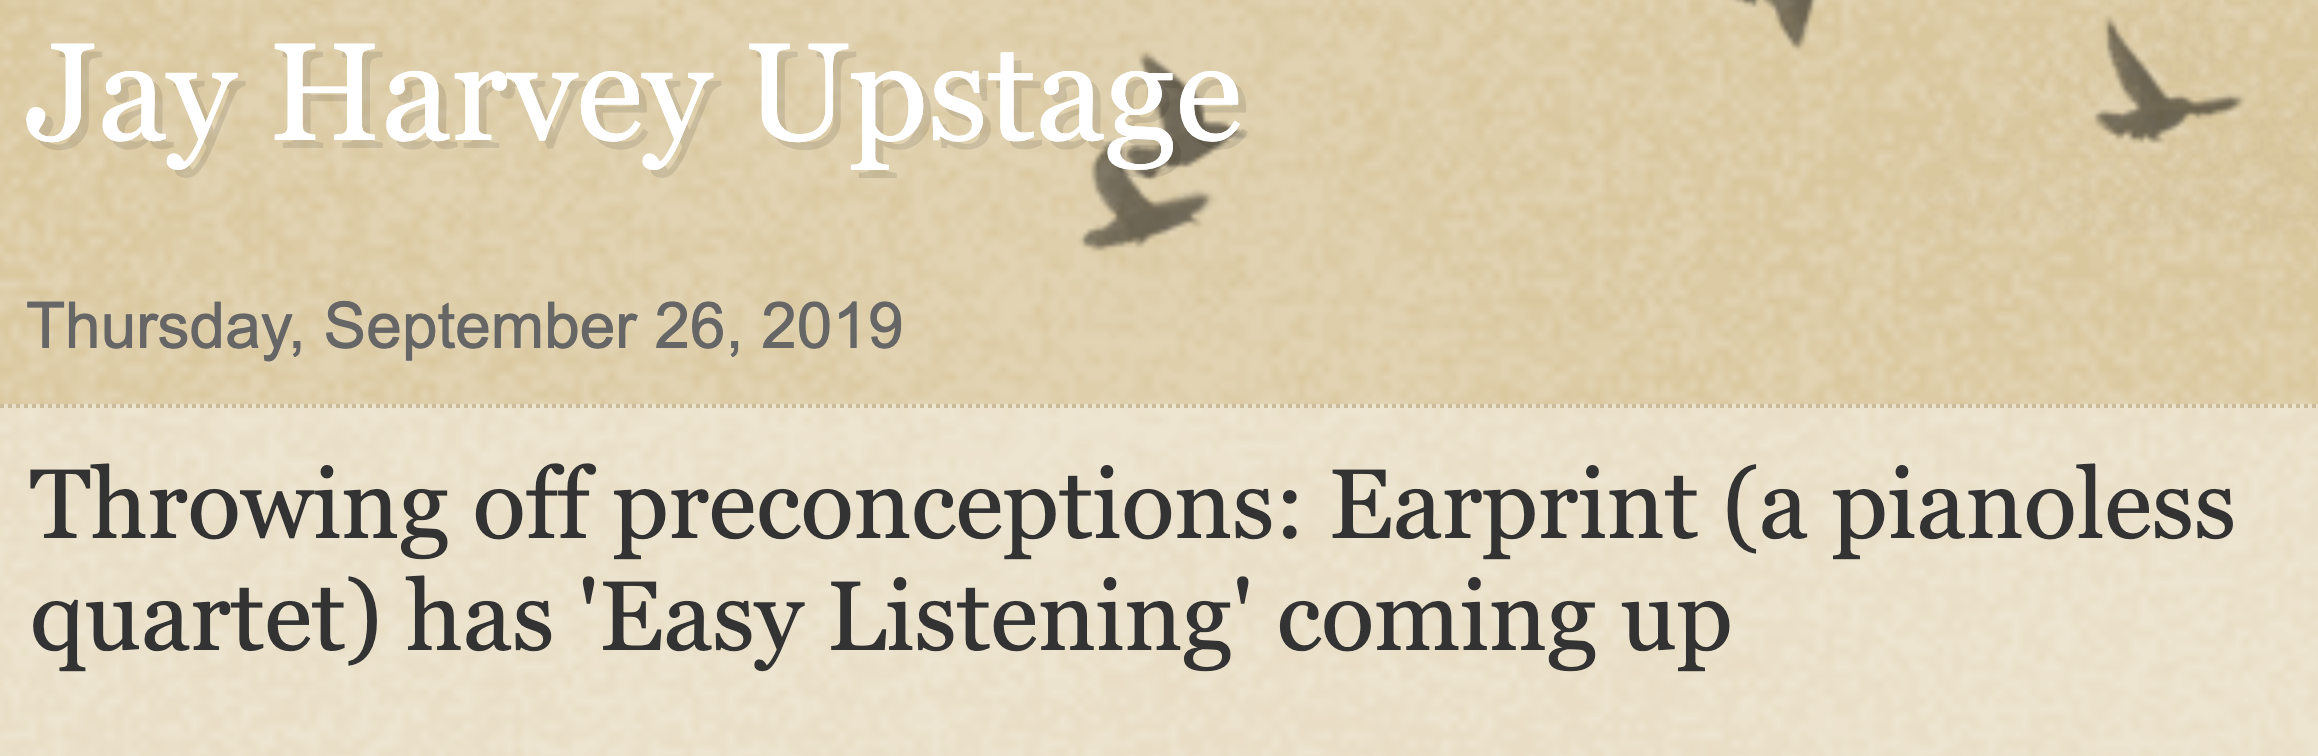 Jay Harvey Upstage Review of Earprint album Easy Listening